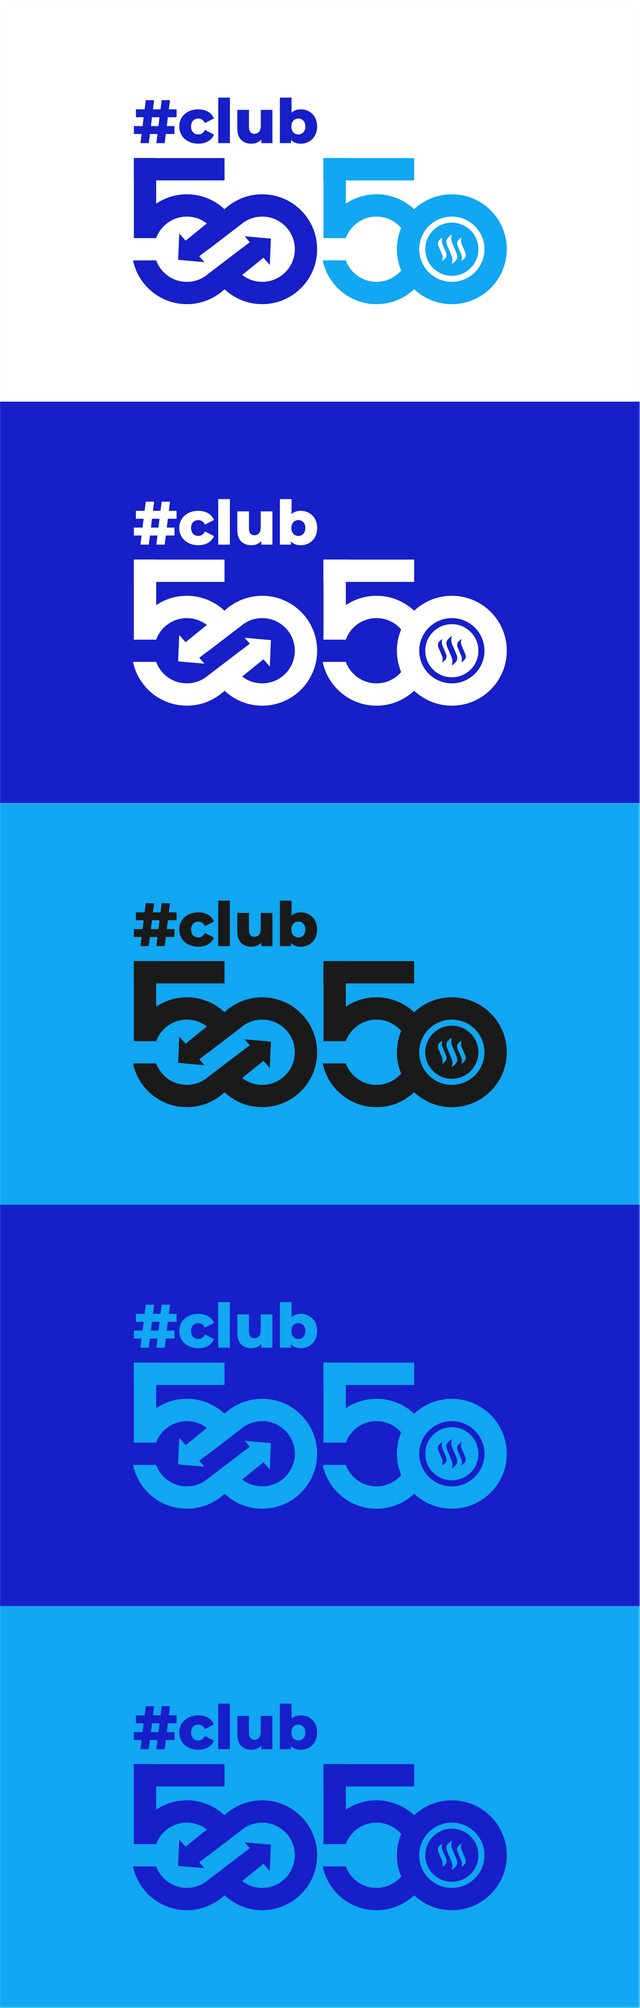 logo club5050.png